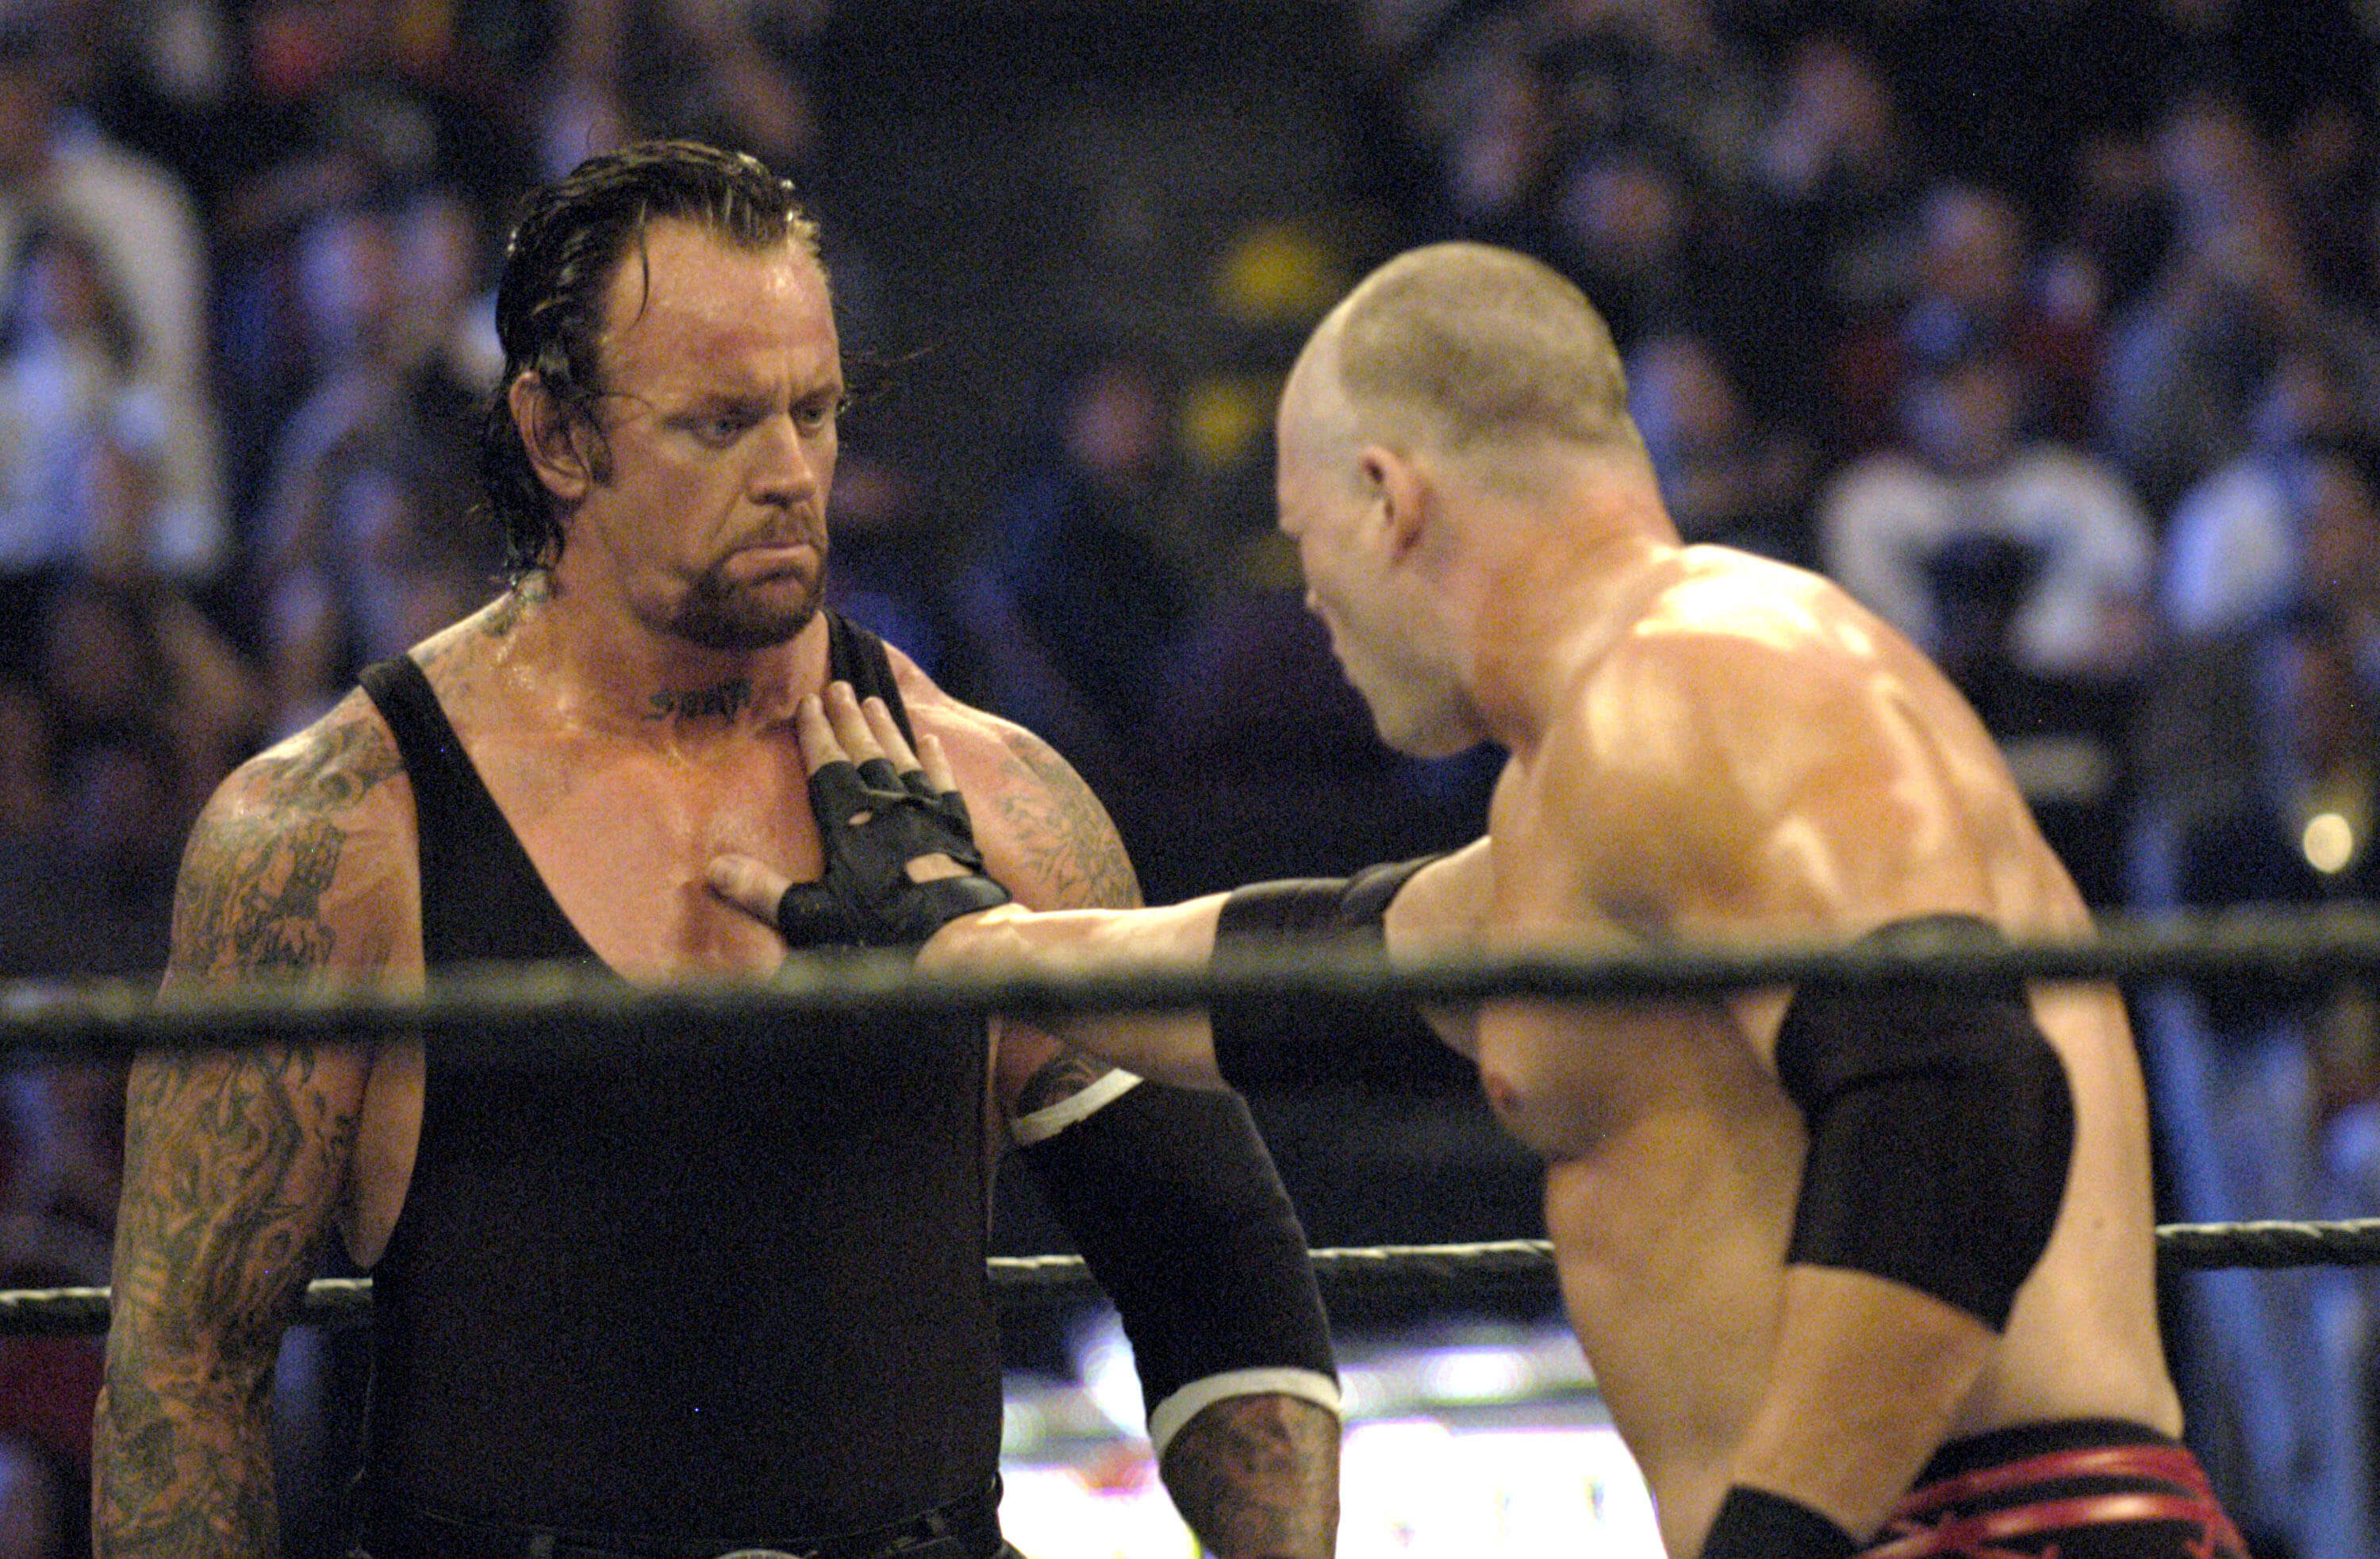 The Undertaker vs Kane during Wrestle Mania XX.